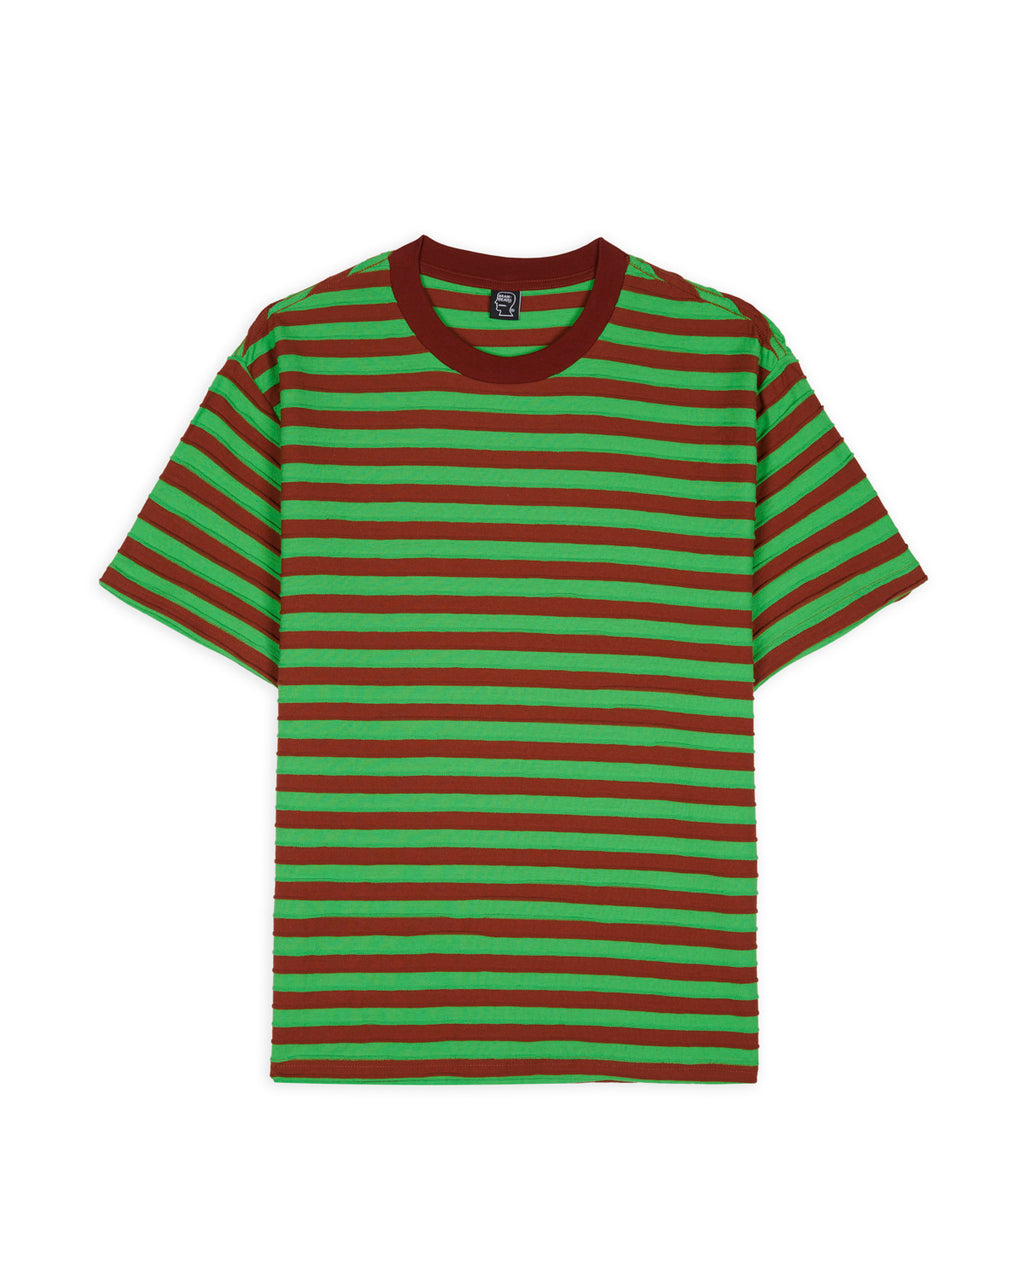 Denny Blaine Striped T-Shirt - Apple/Caramel